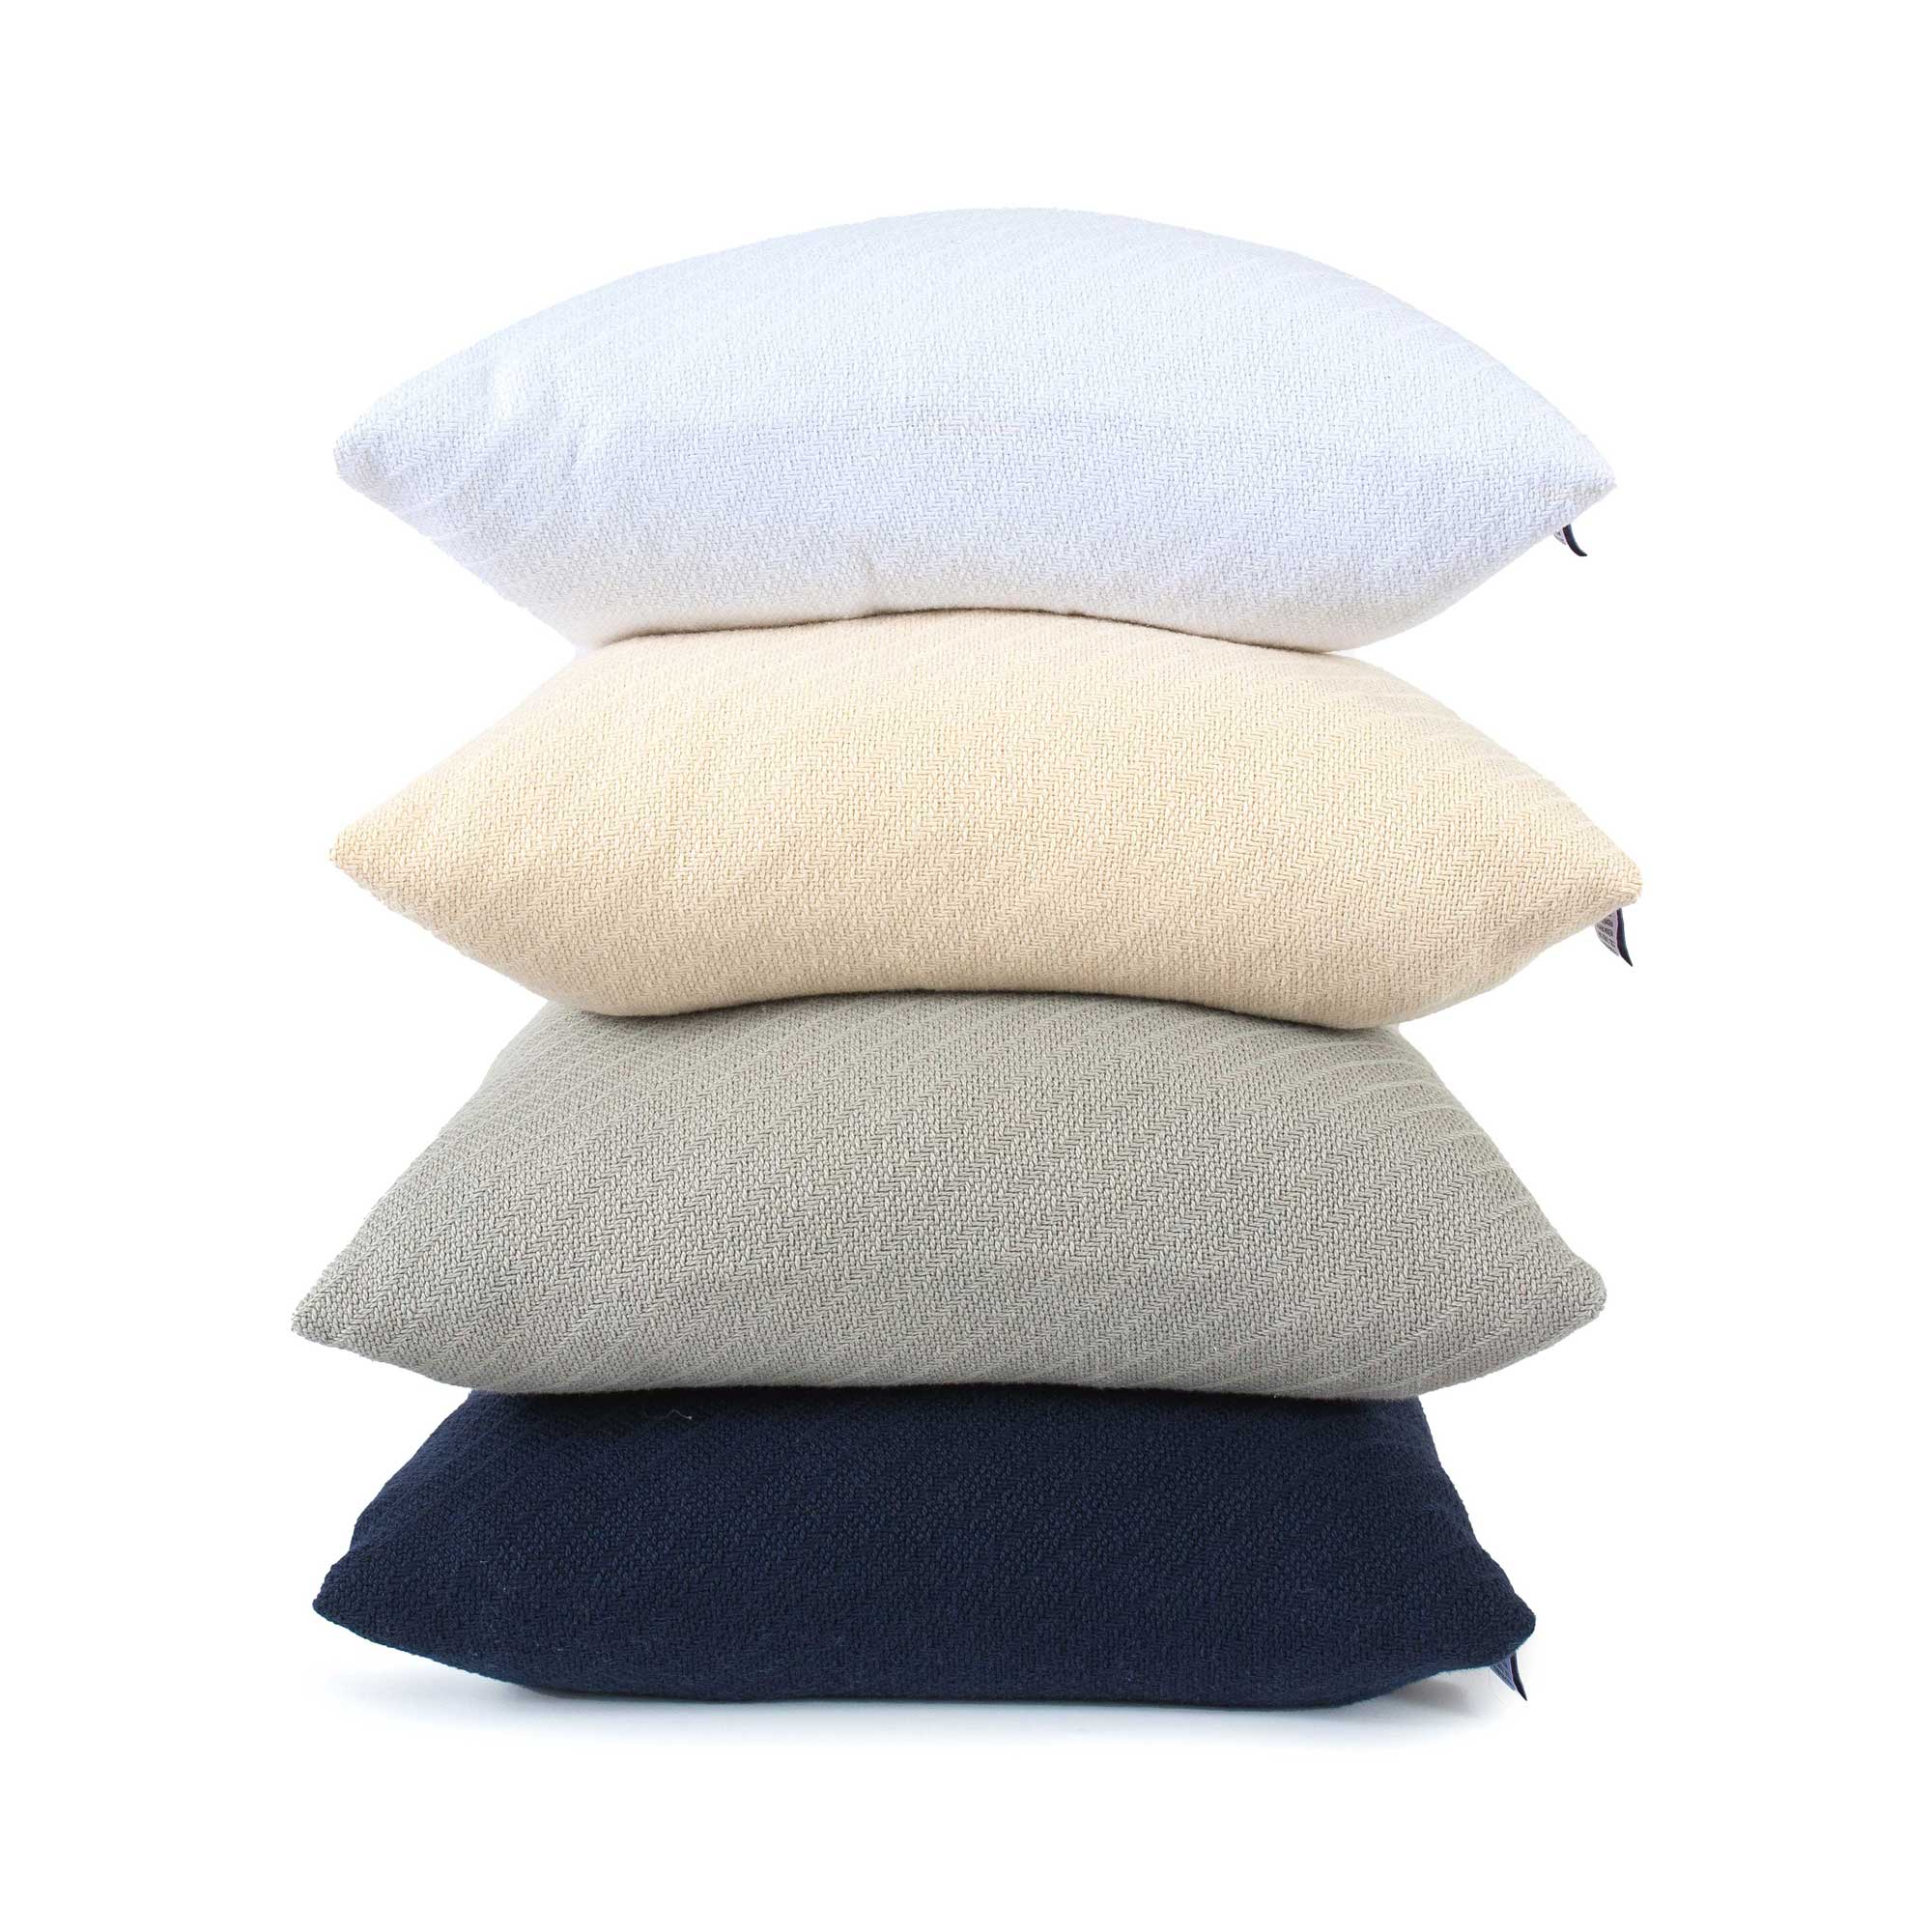 Luster Loft Throw Pillows - American Blanket Company